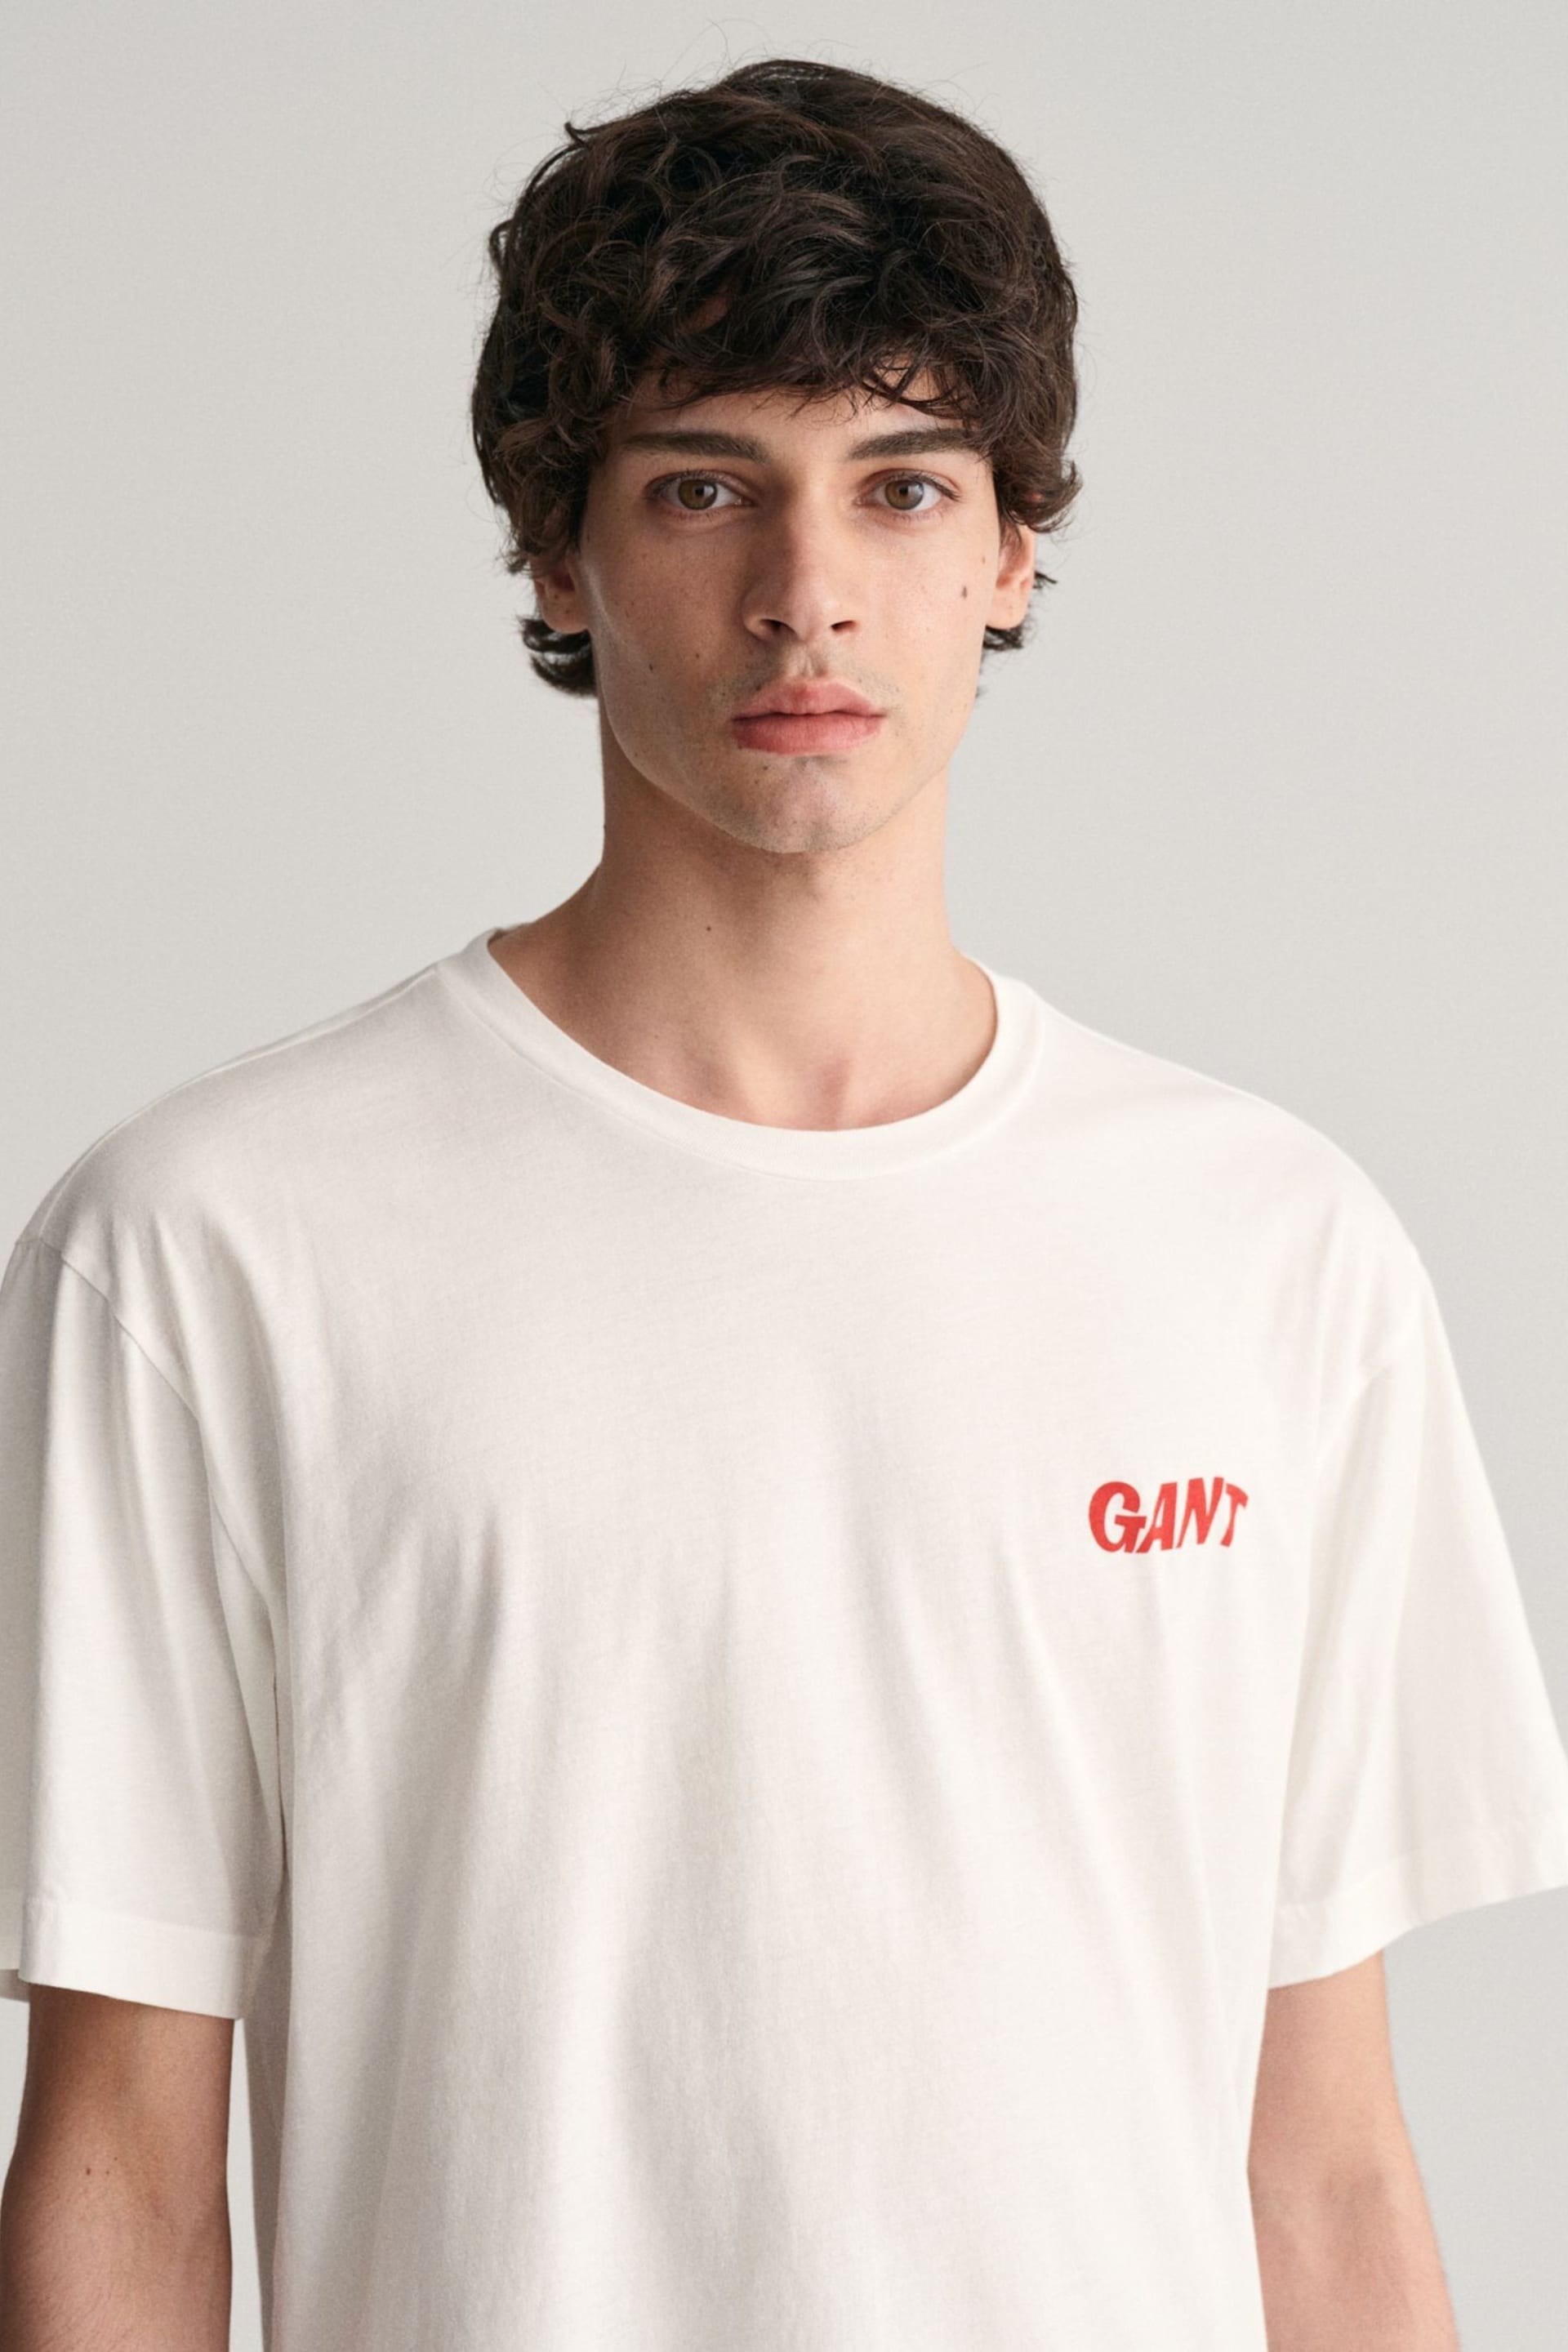 GANT White Washed Graphic T-Shirt - Image 8 of 10